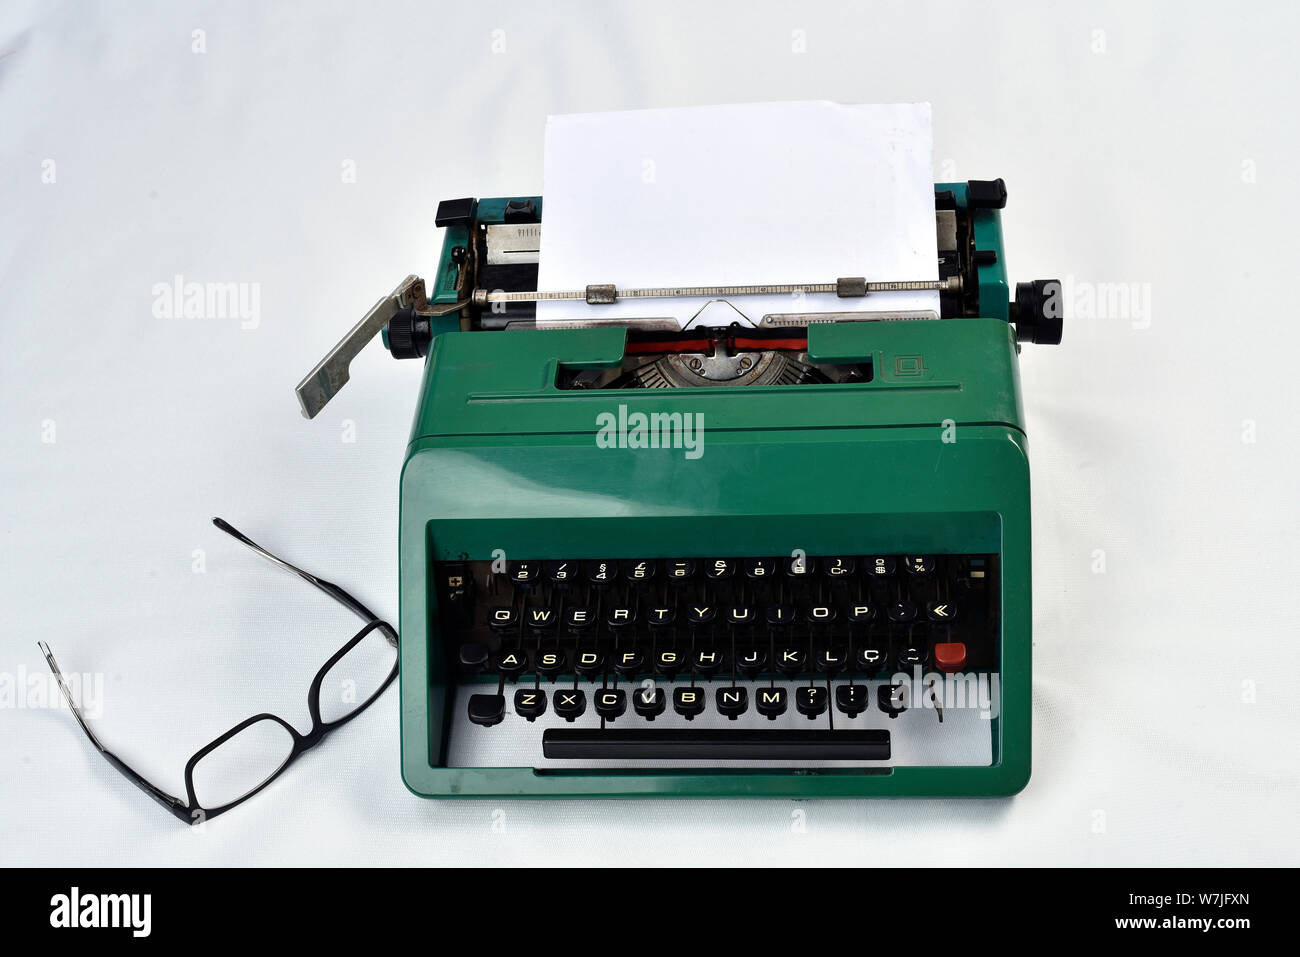 Maquina de escribir hi-res stock photography and images - Alamy